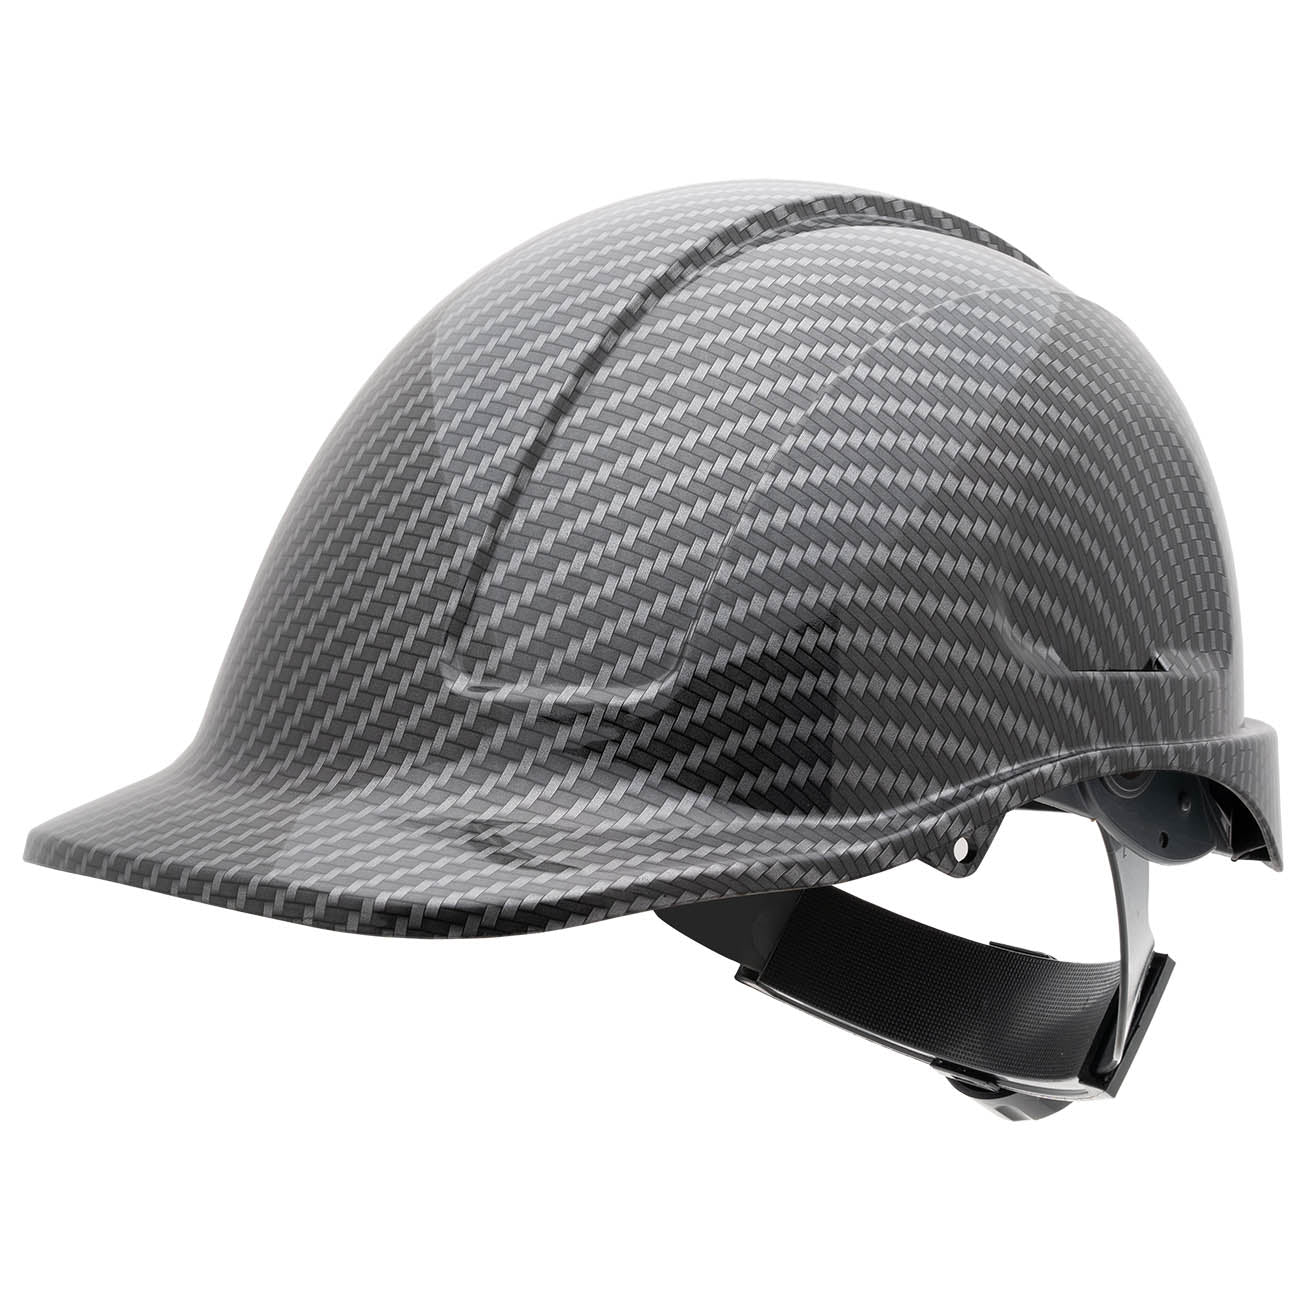 Honeywell Short Brim Hard Hat - Non-Vented Hydrographic